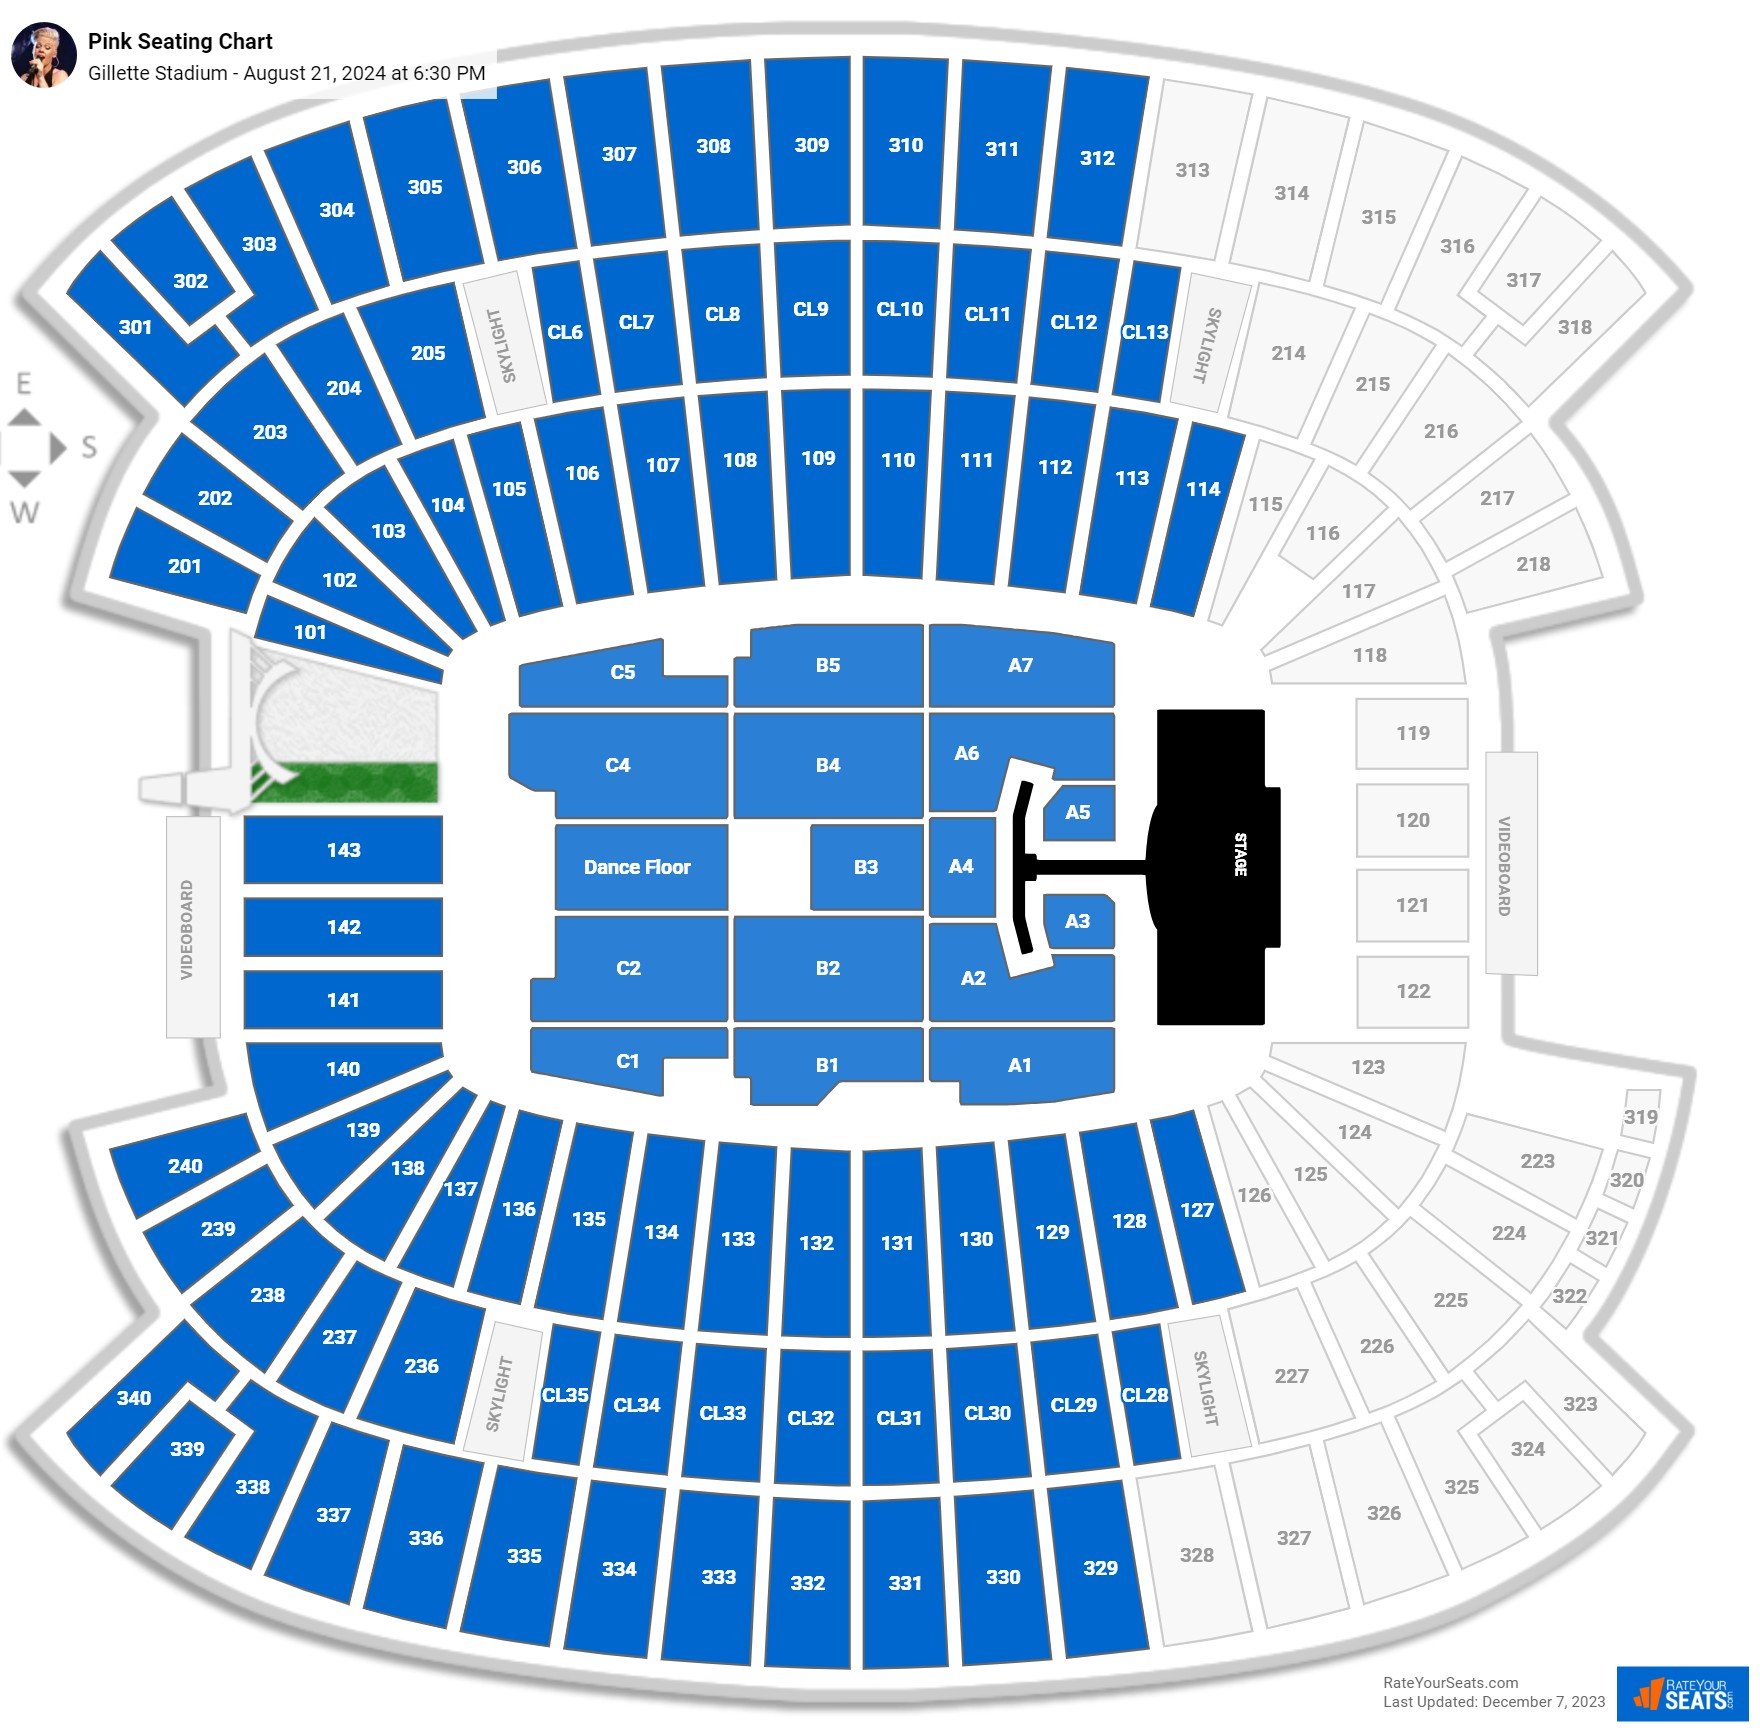 Gillette Stadium Concert Seating Chart